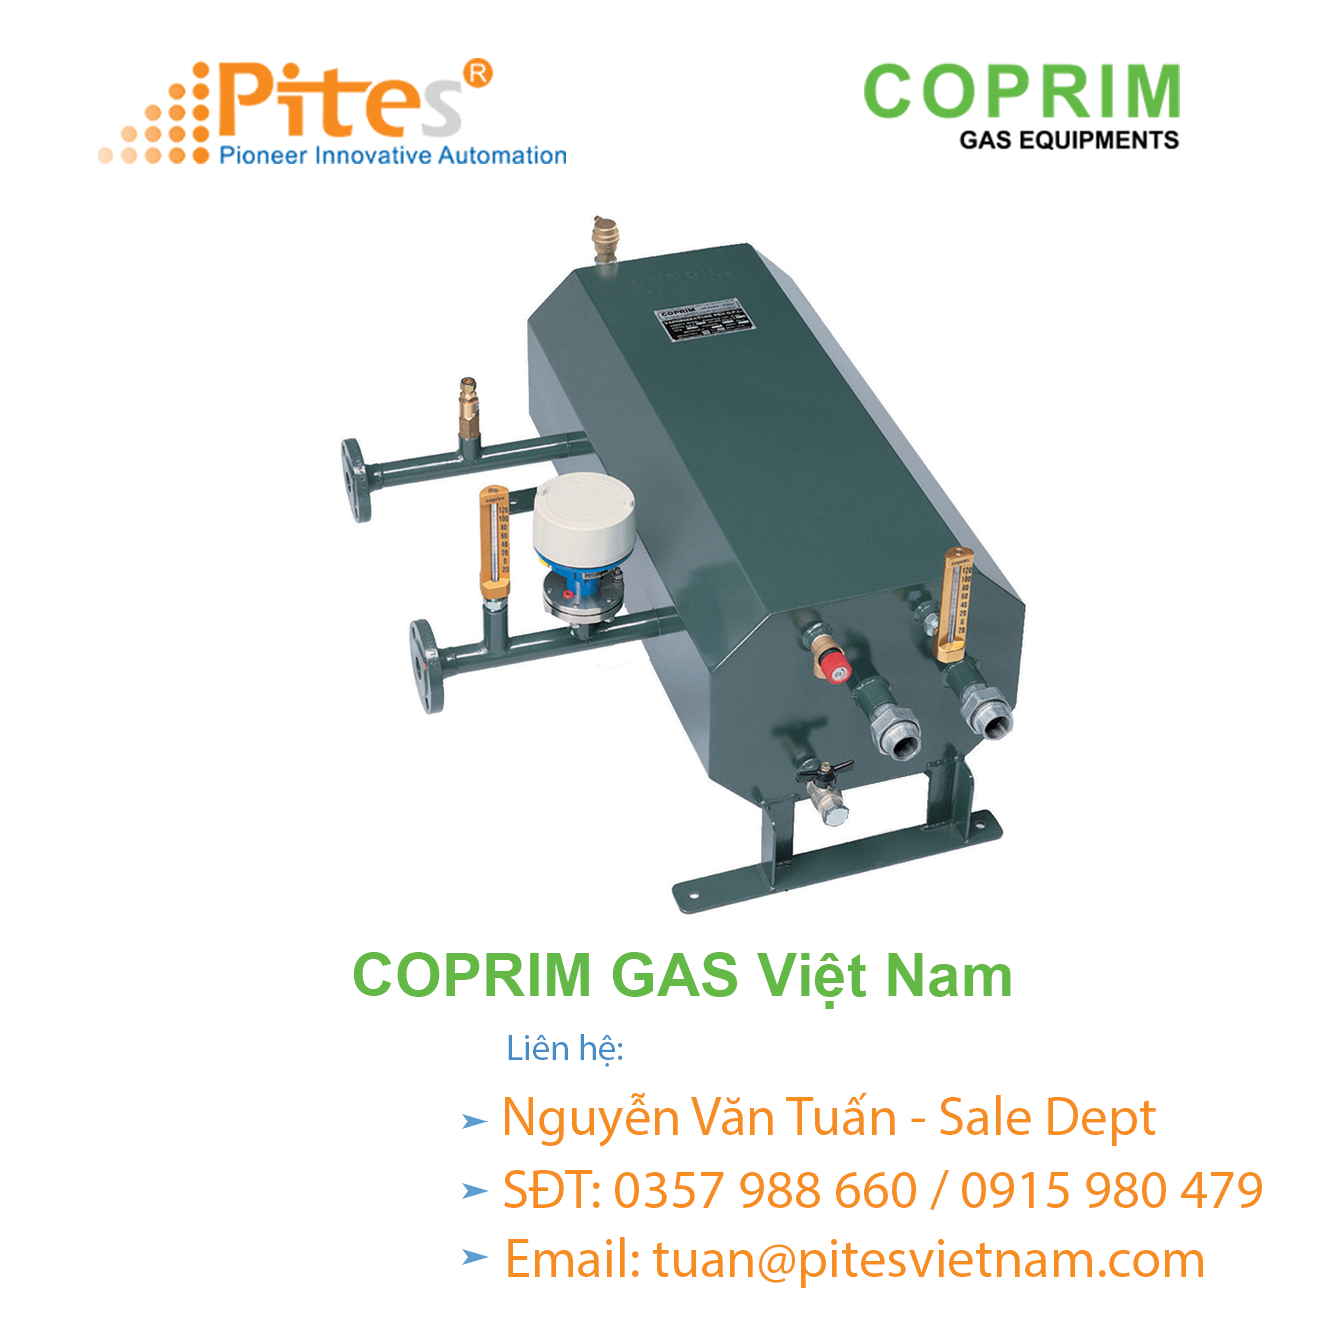 coprim-gas-vietnam-coprim-gas-viet-nam-dai-ly-coprim-gas-list-code-coprim-gas-part-13.png